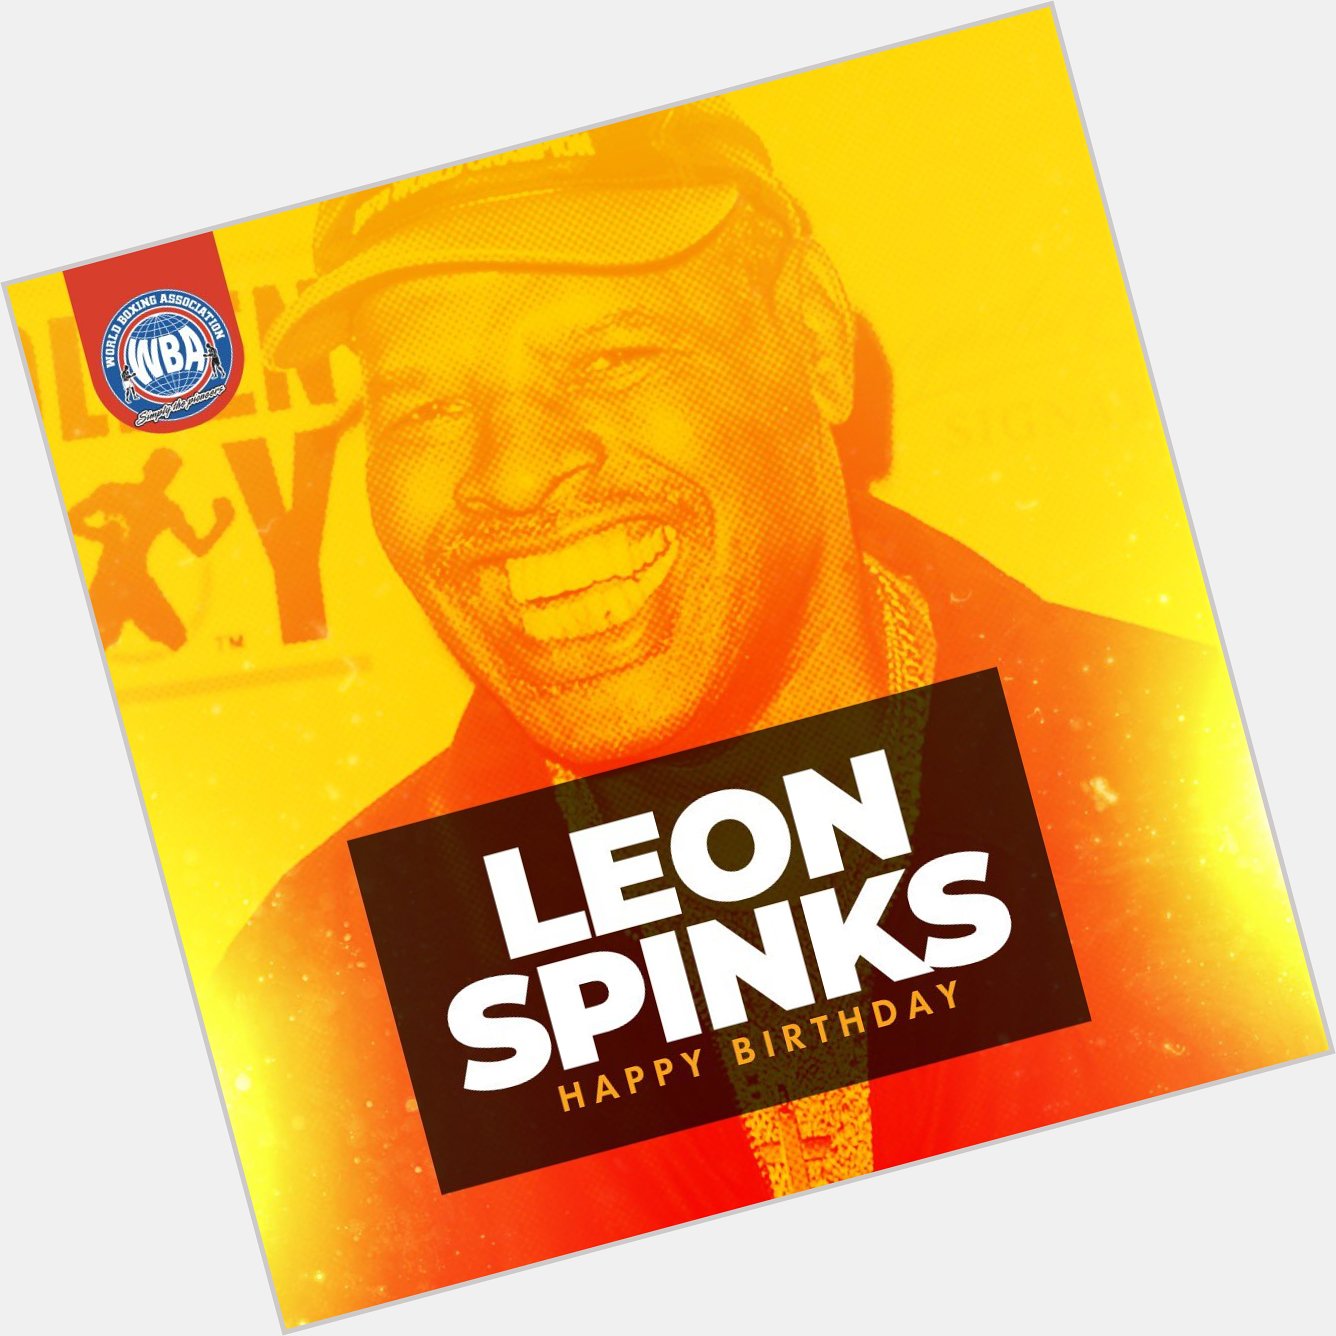 Happy Birthday to Leon Spinks  